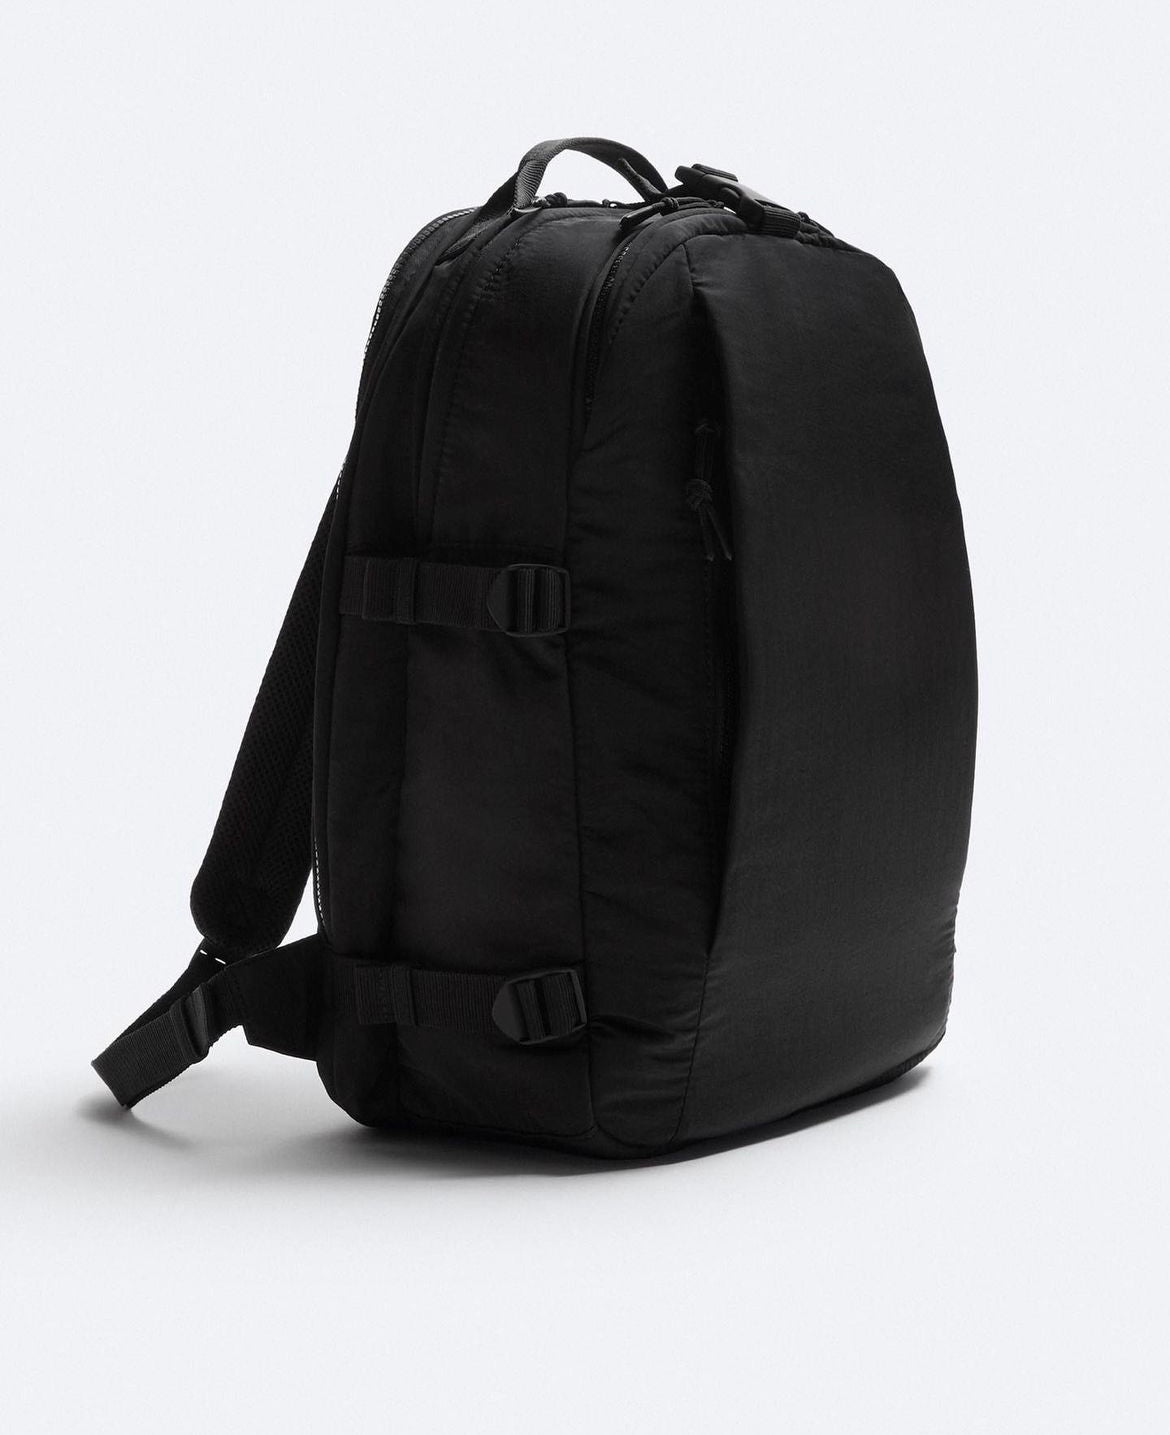 Zara multi pocket nation backpack